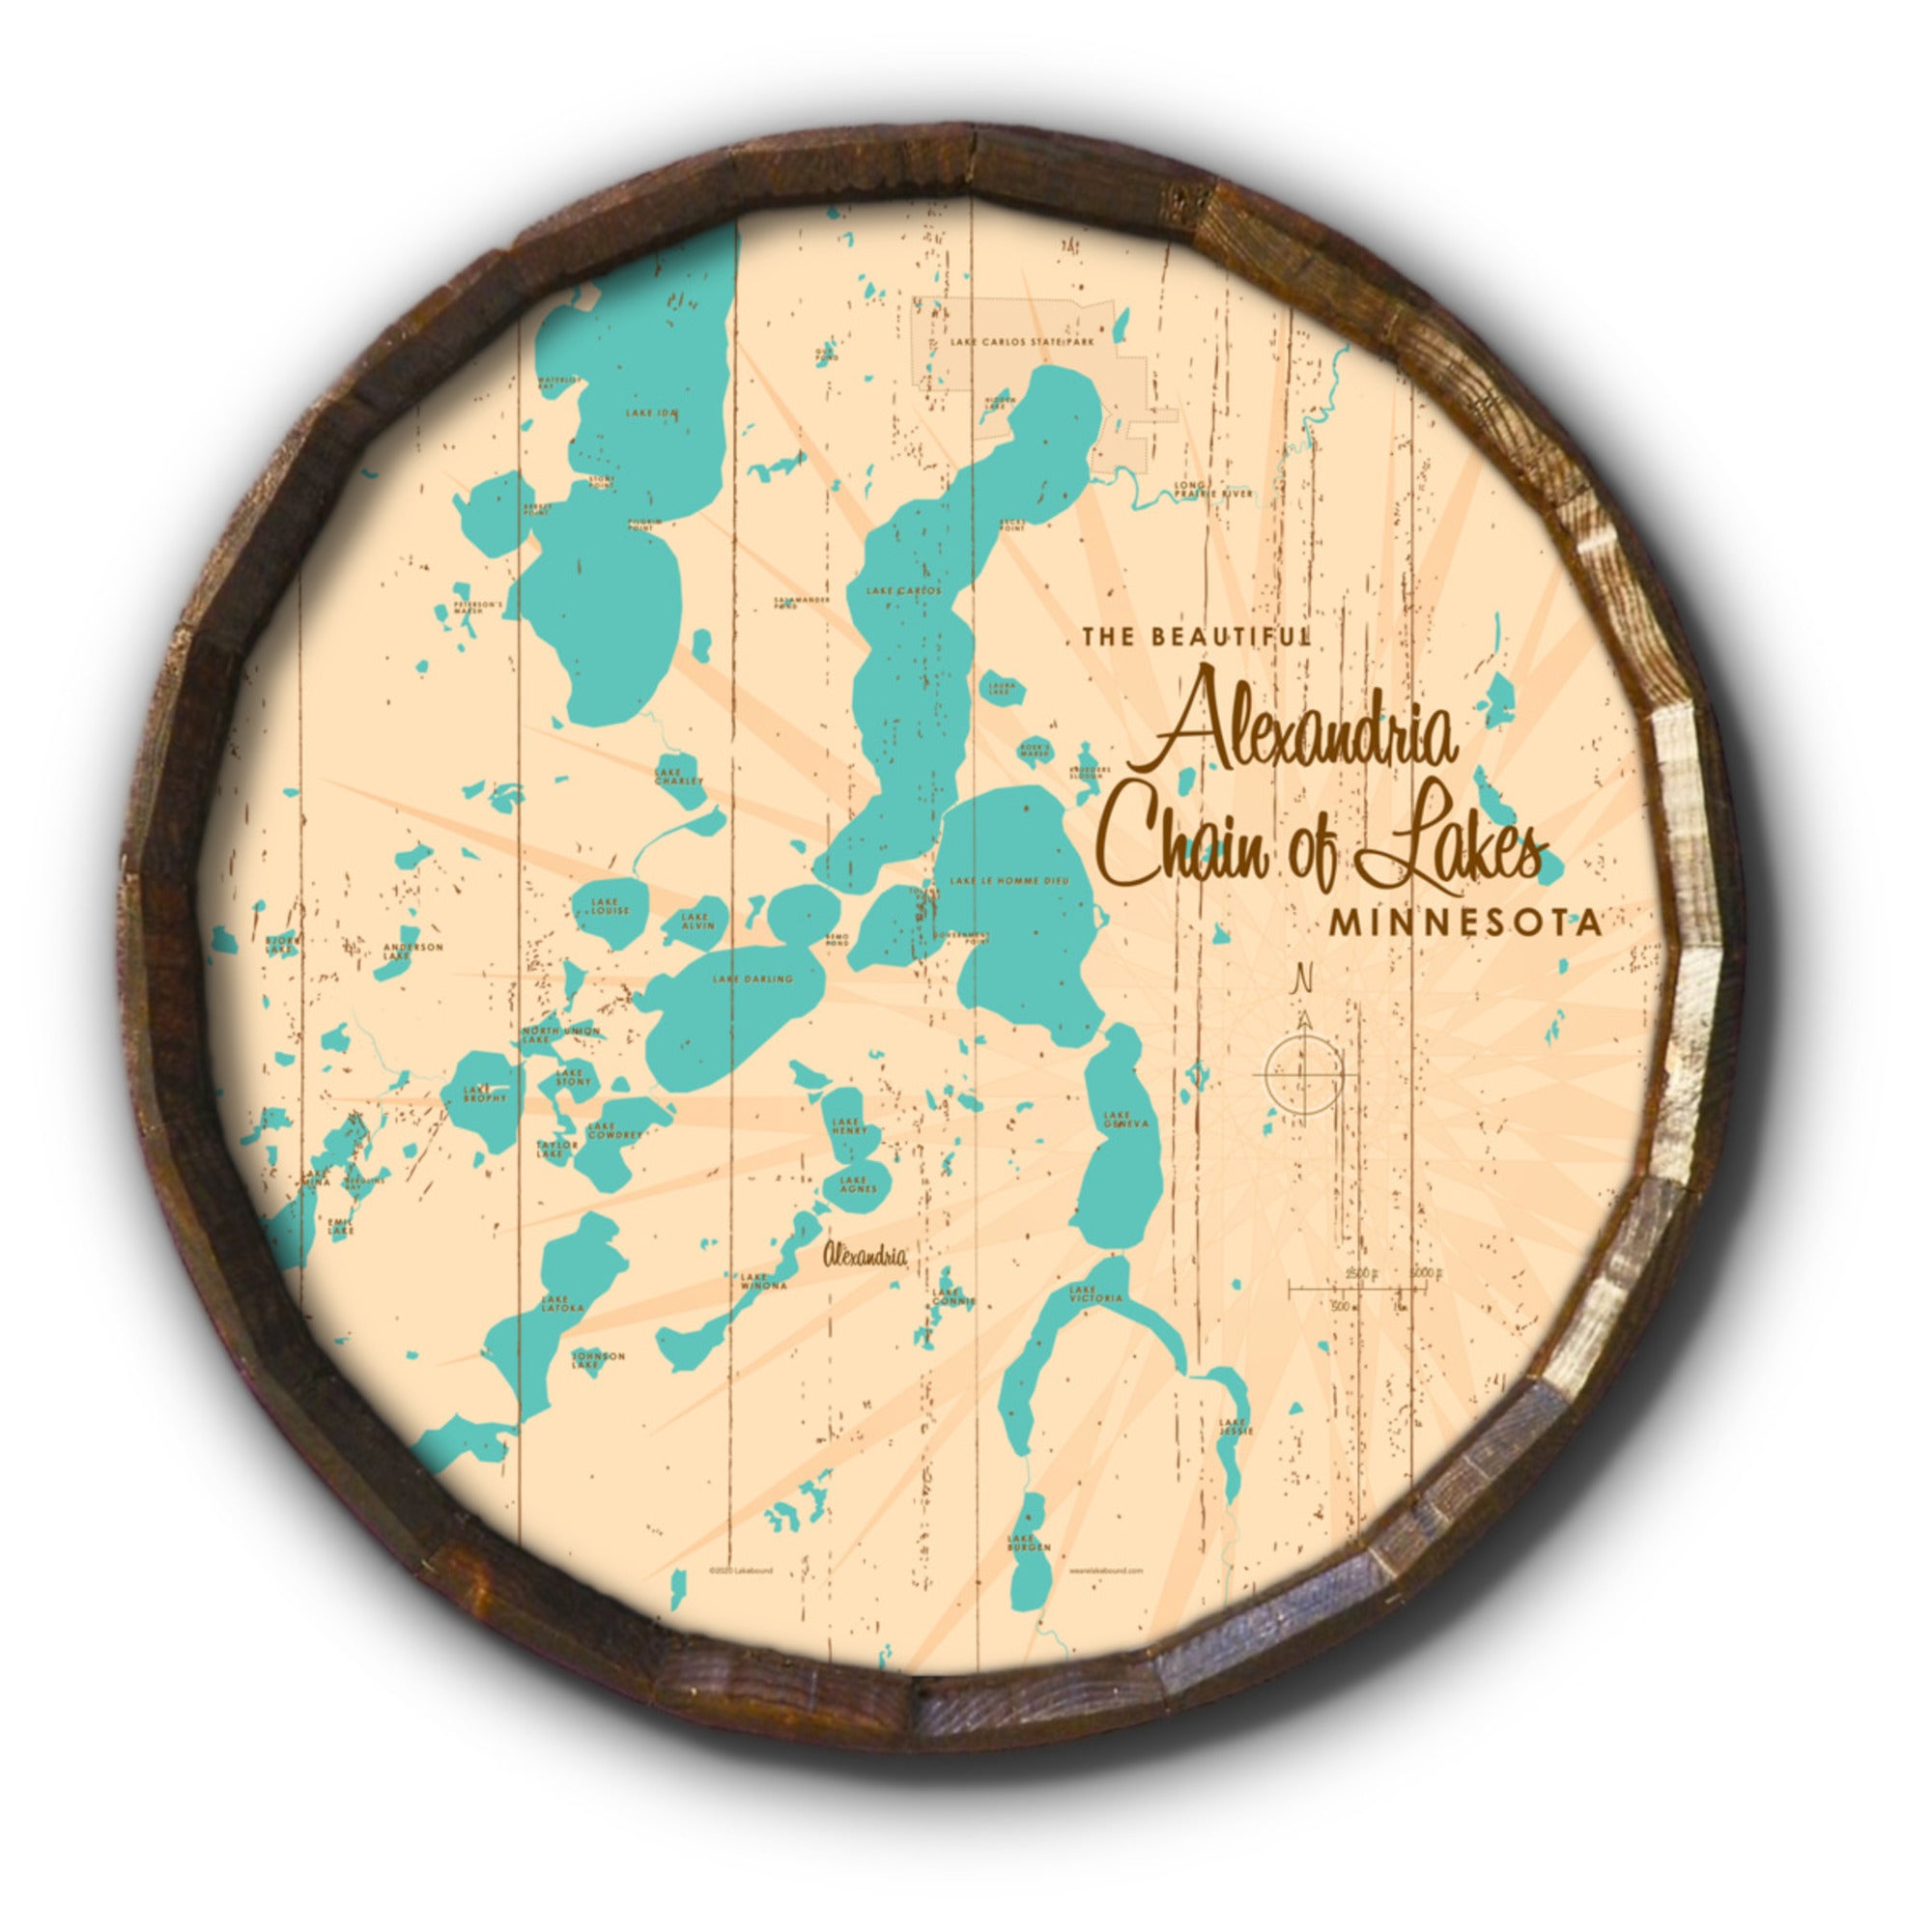 Alexandria Chain of Lakes Minnesota, Rustic Barrel End Map Art